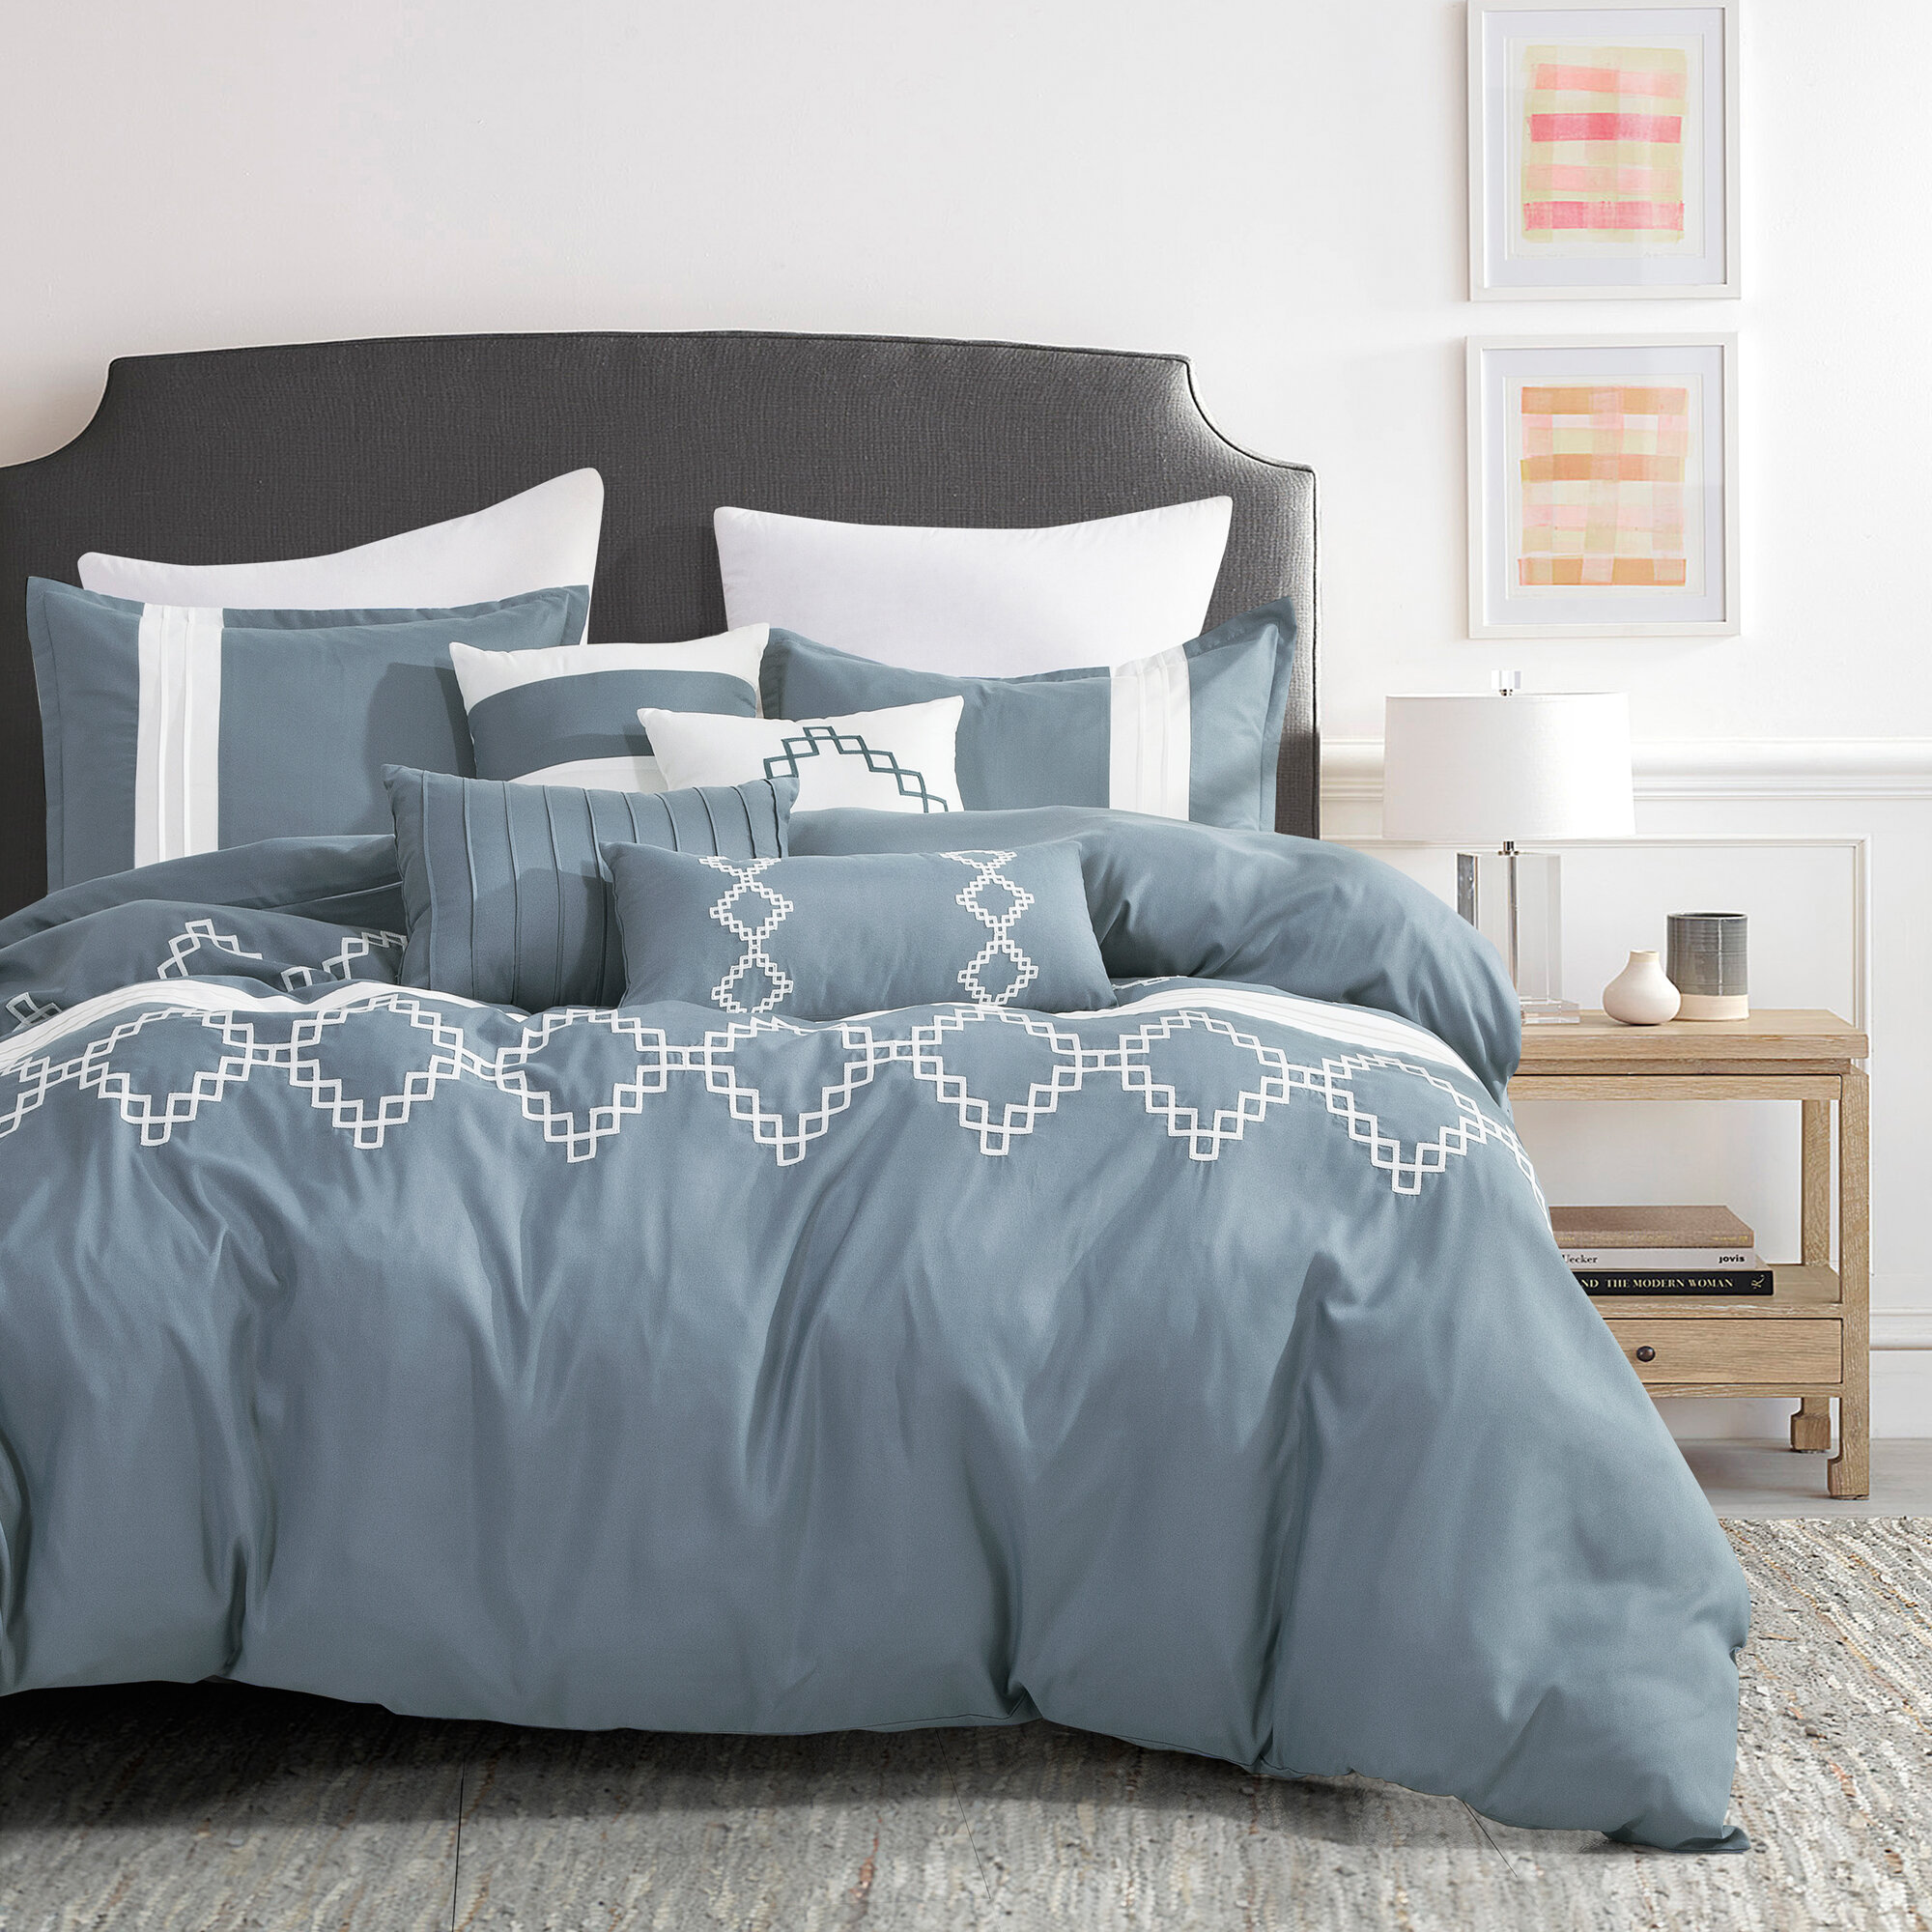 Comforter Set 7 Piece King Queen With Bedskirt Modern Deco Bedding Bedspread New 